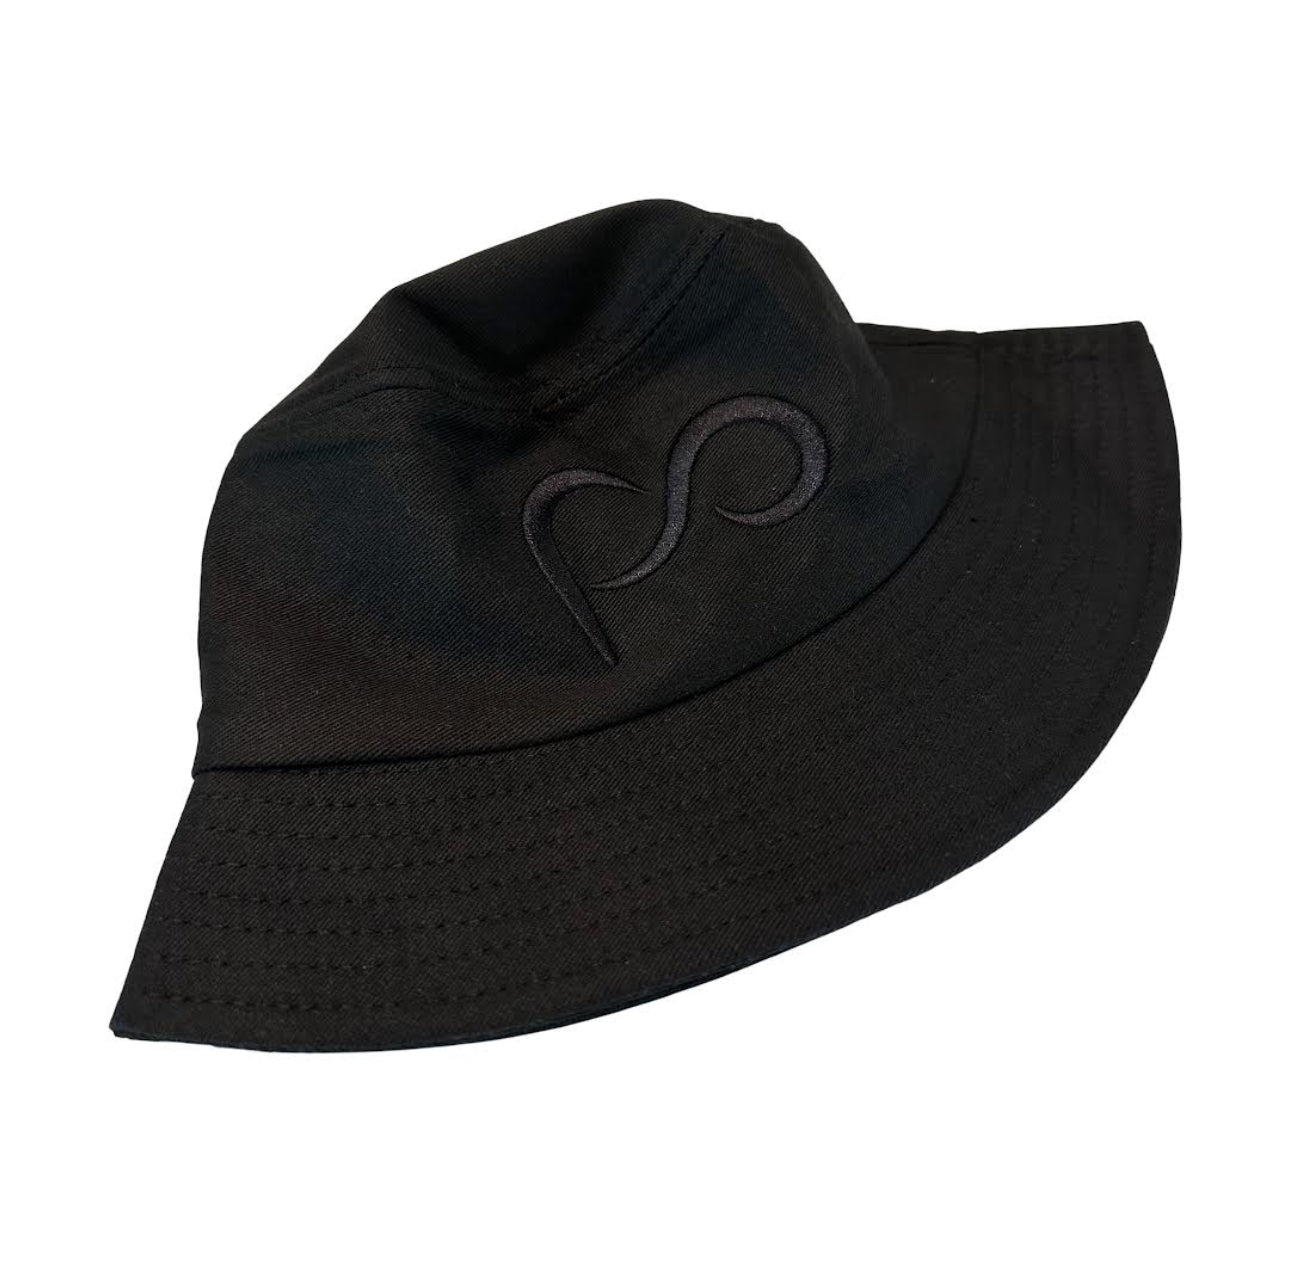 Black PO Bucket Hat with Black PO logo